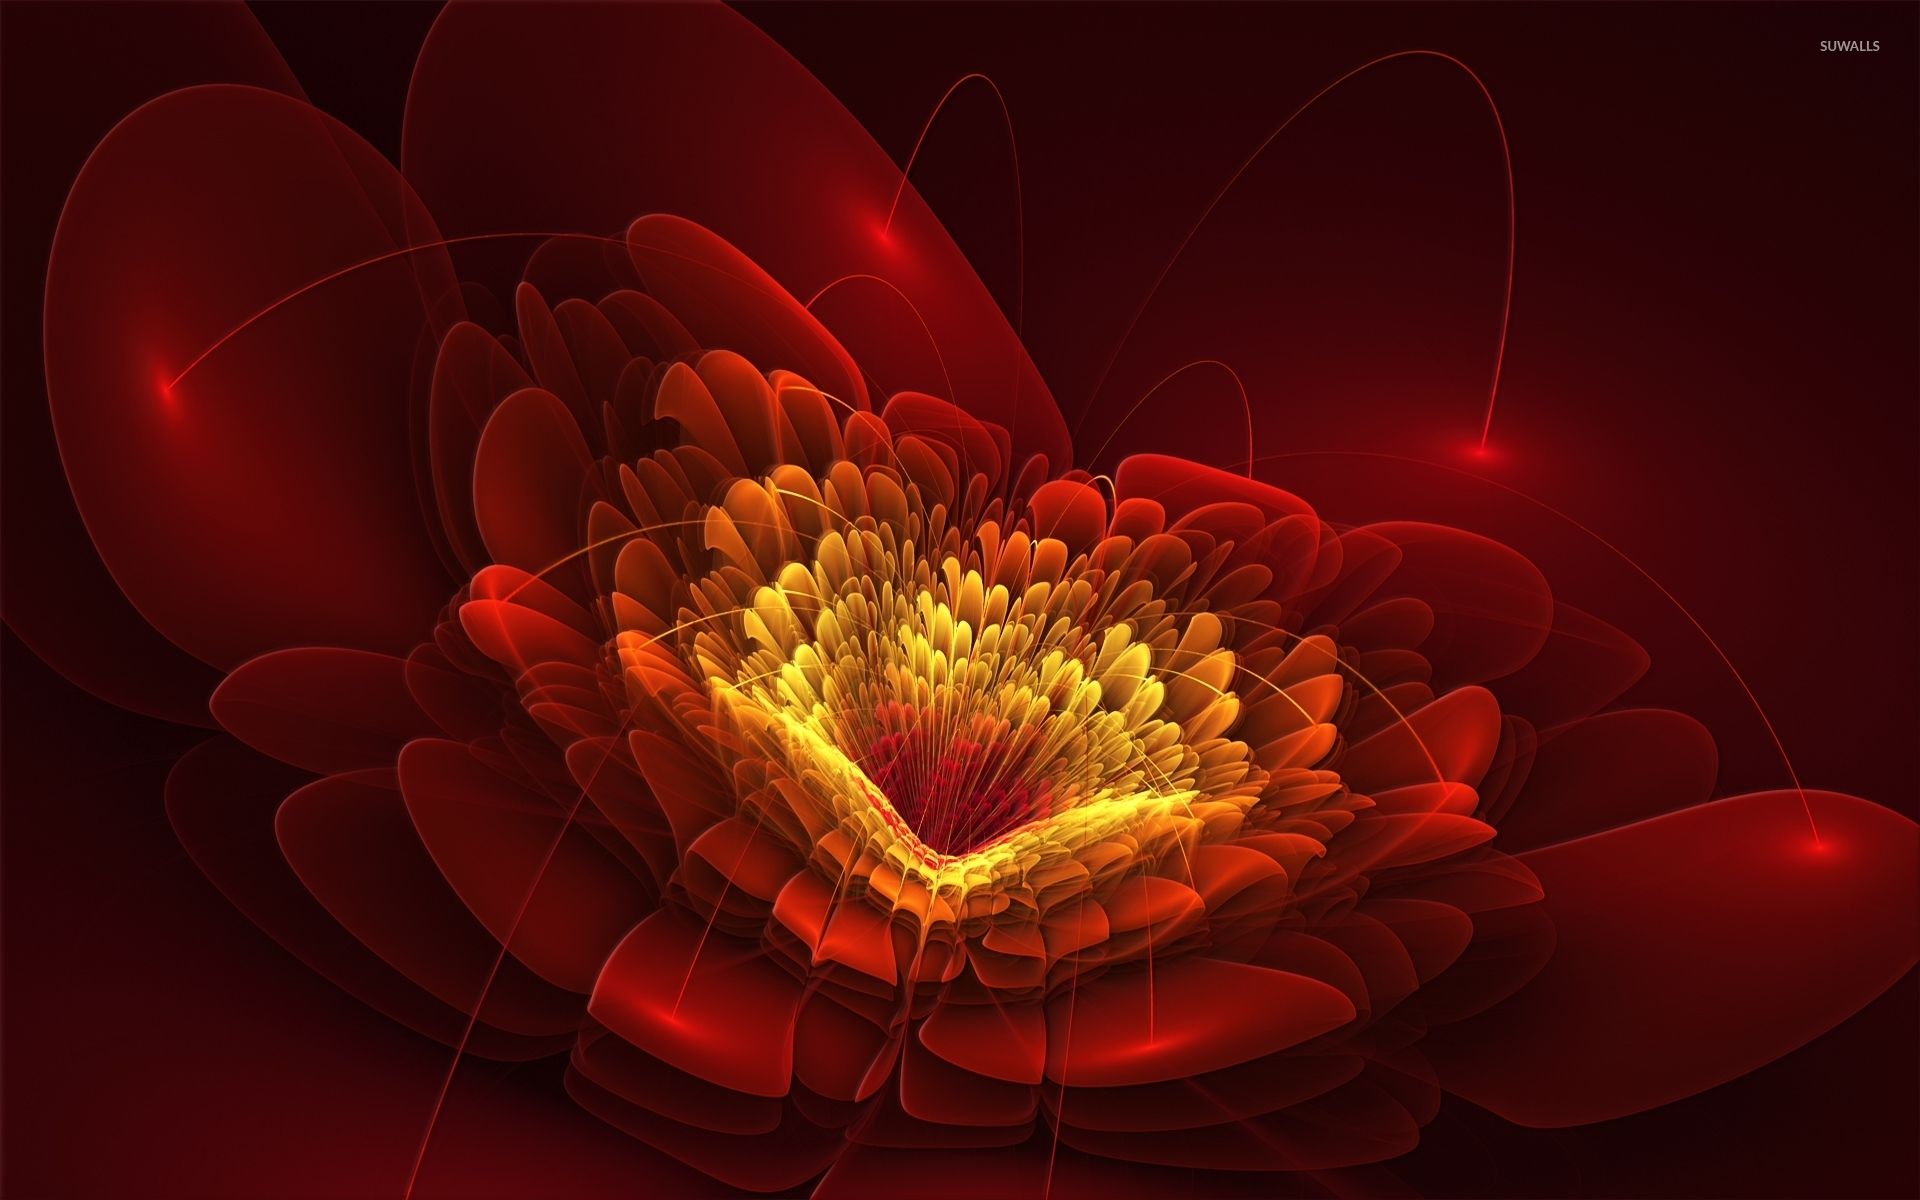 Golden core of the red flower wallpaper .suwalls.com